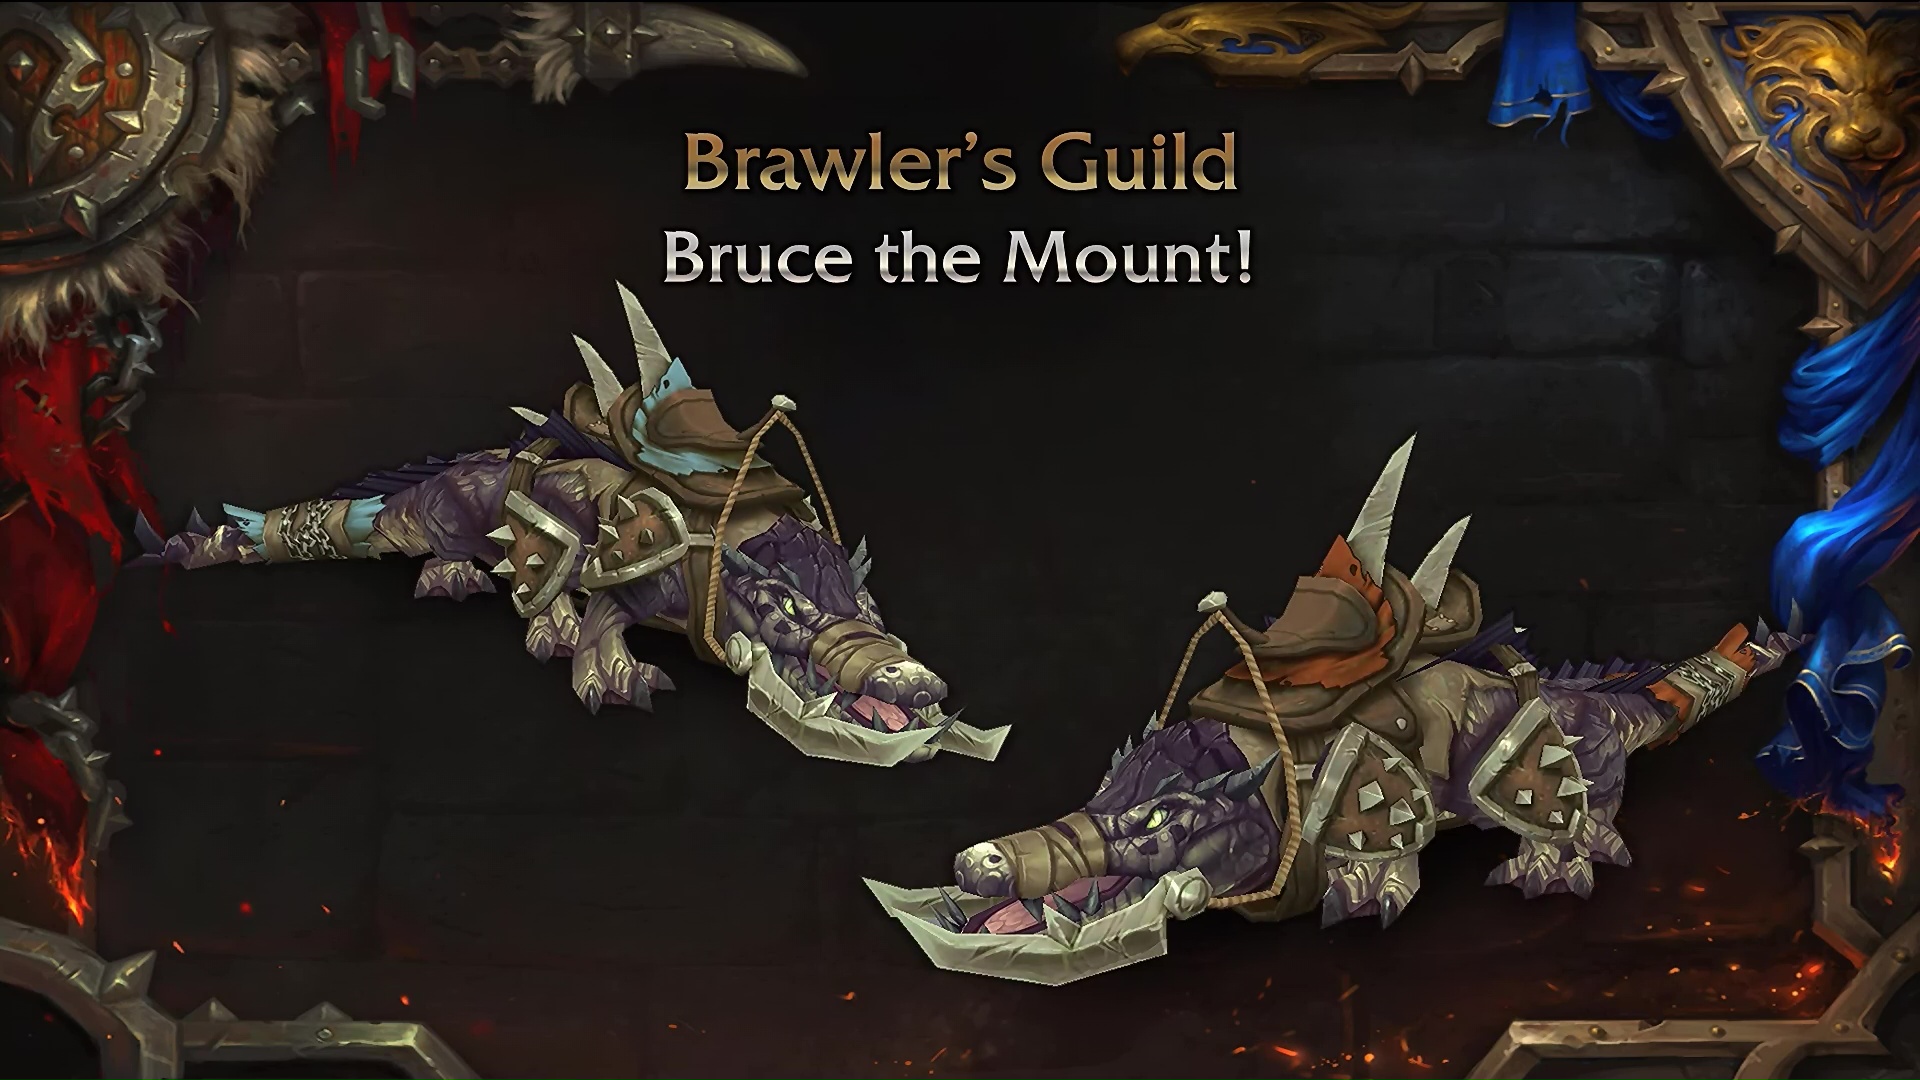 Brawler's Guild bruce the mount